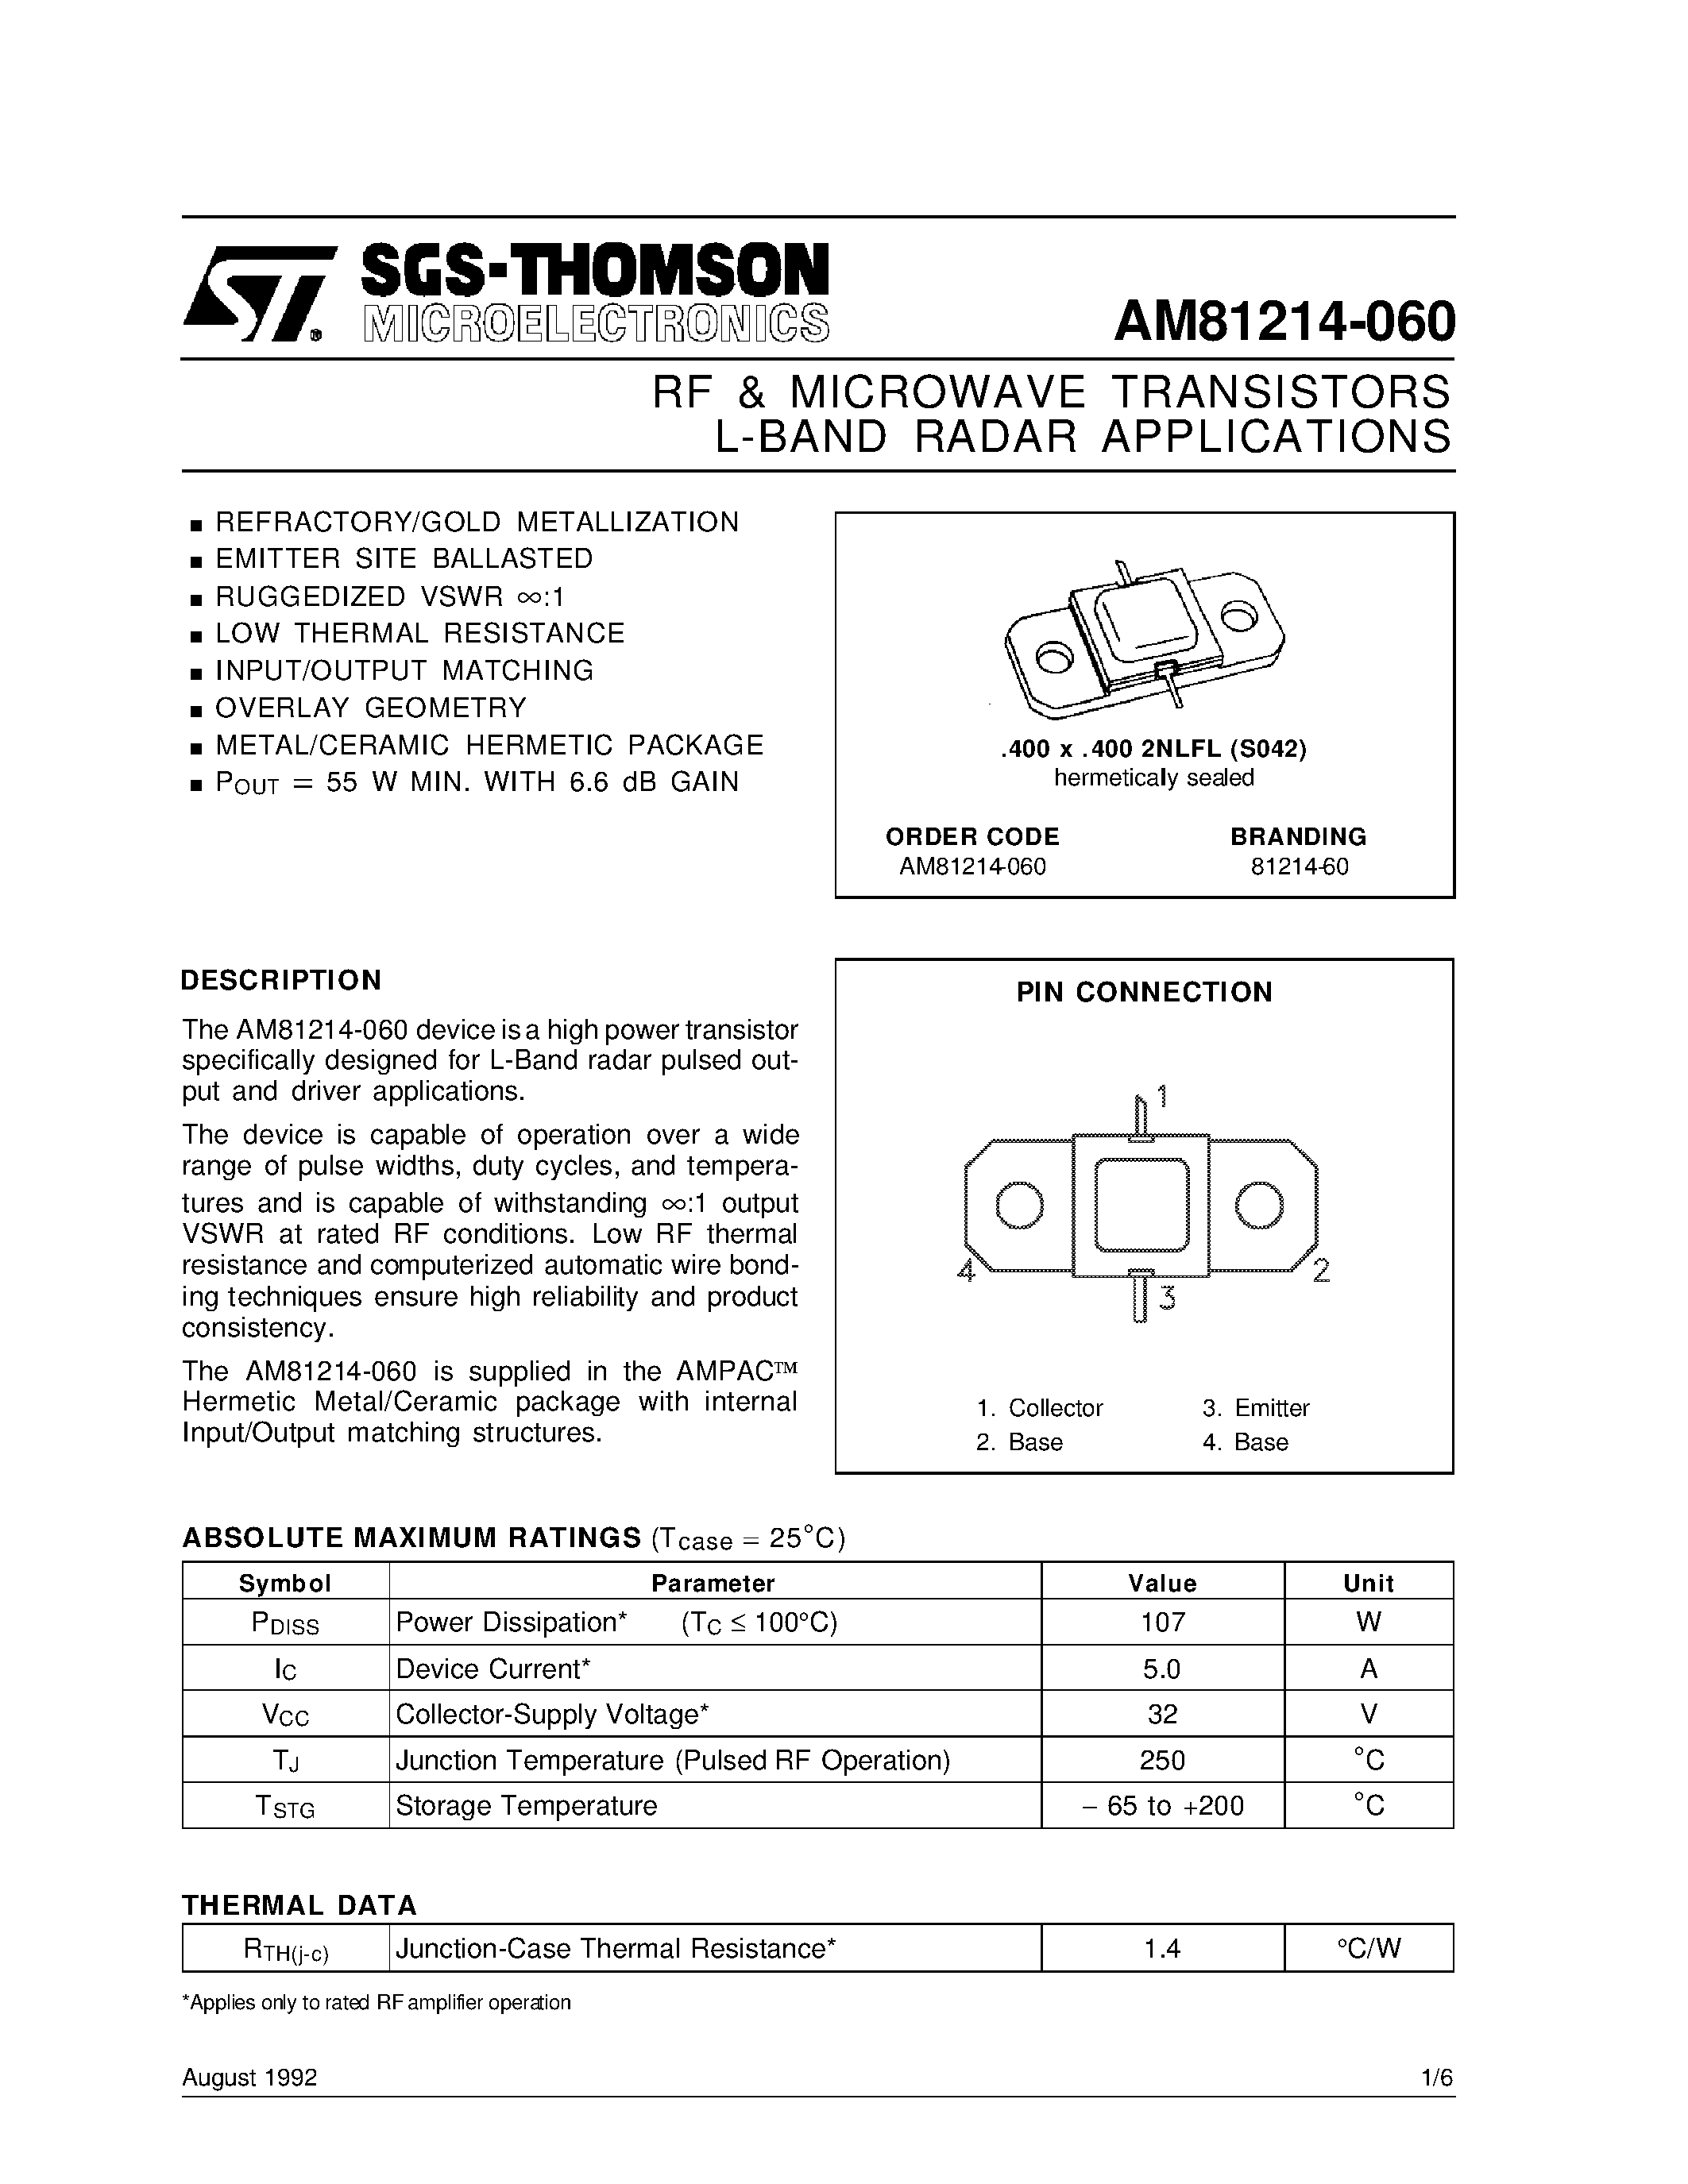 Datasheet AM81214-060 - L-BAND RADAR APPLICATIONS RF & MICROWAVE TRANSISTORS page 1